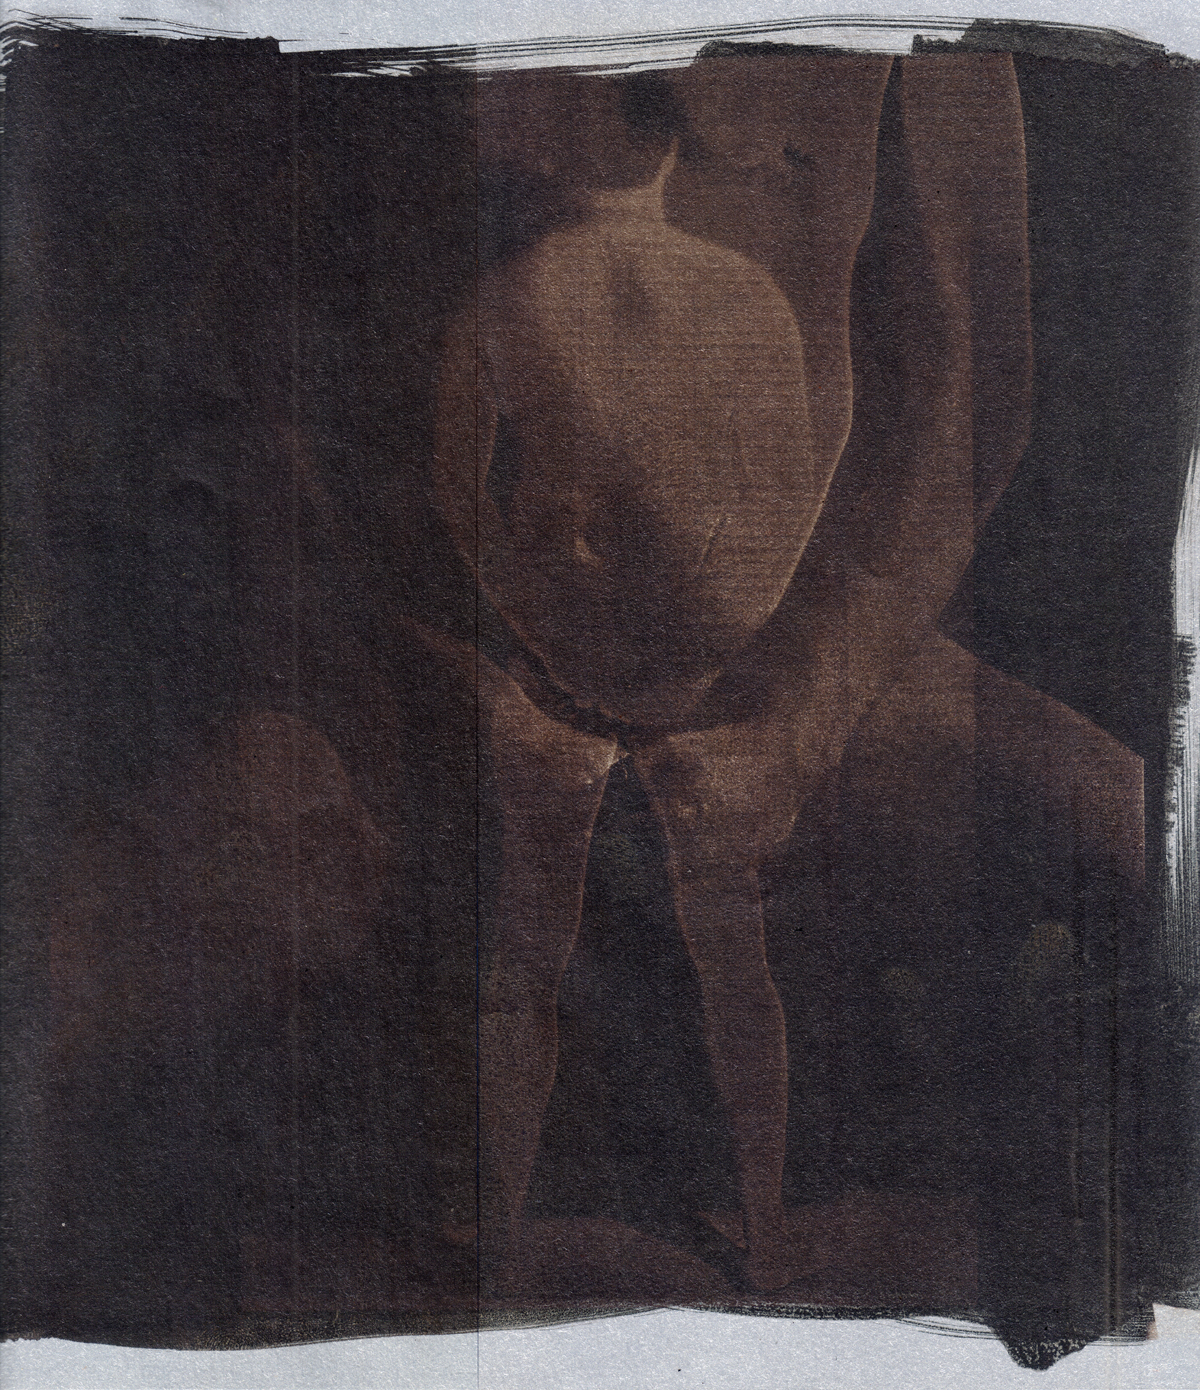 calotype talbotype Salt Print portrait surreal double exposure contact photography analogic dark lab